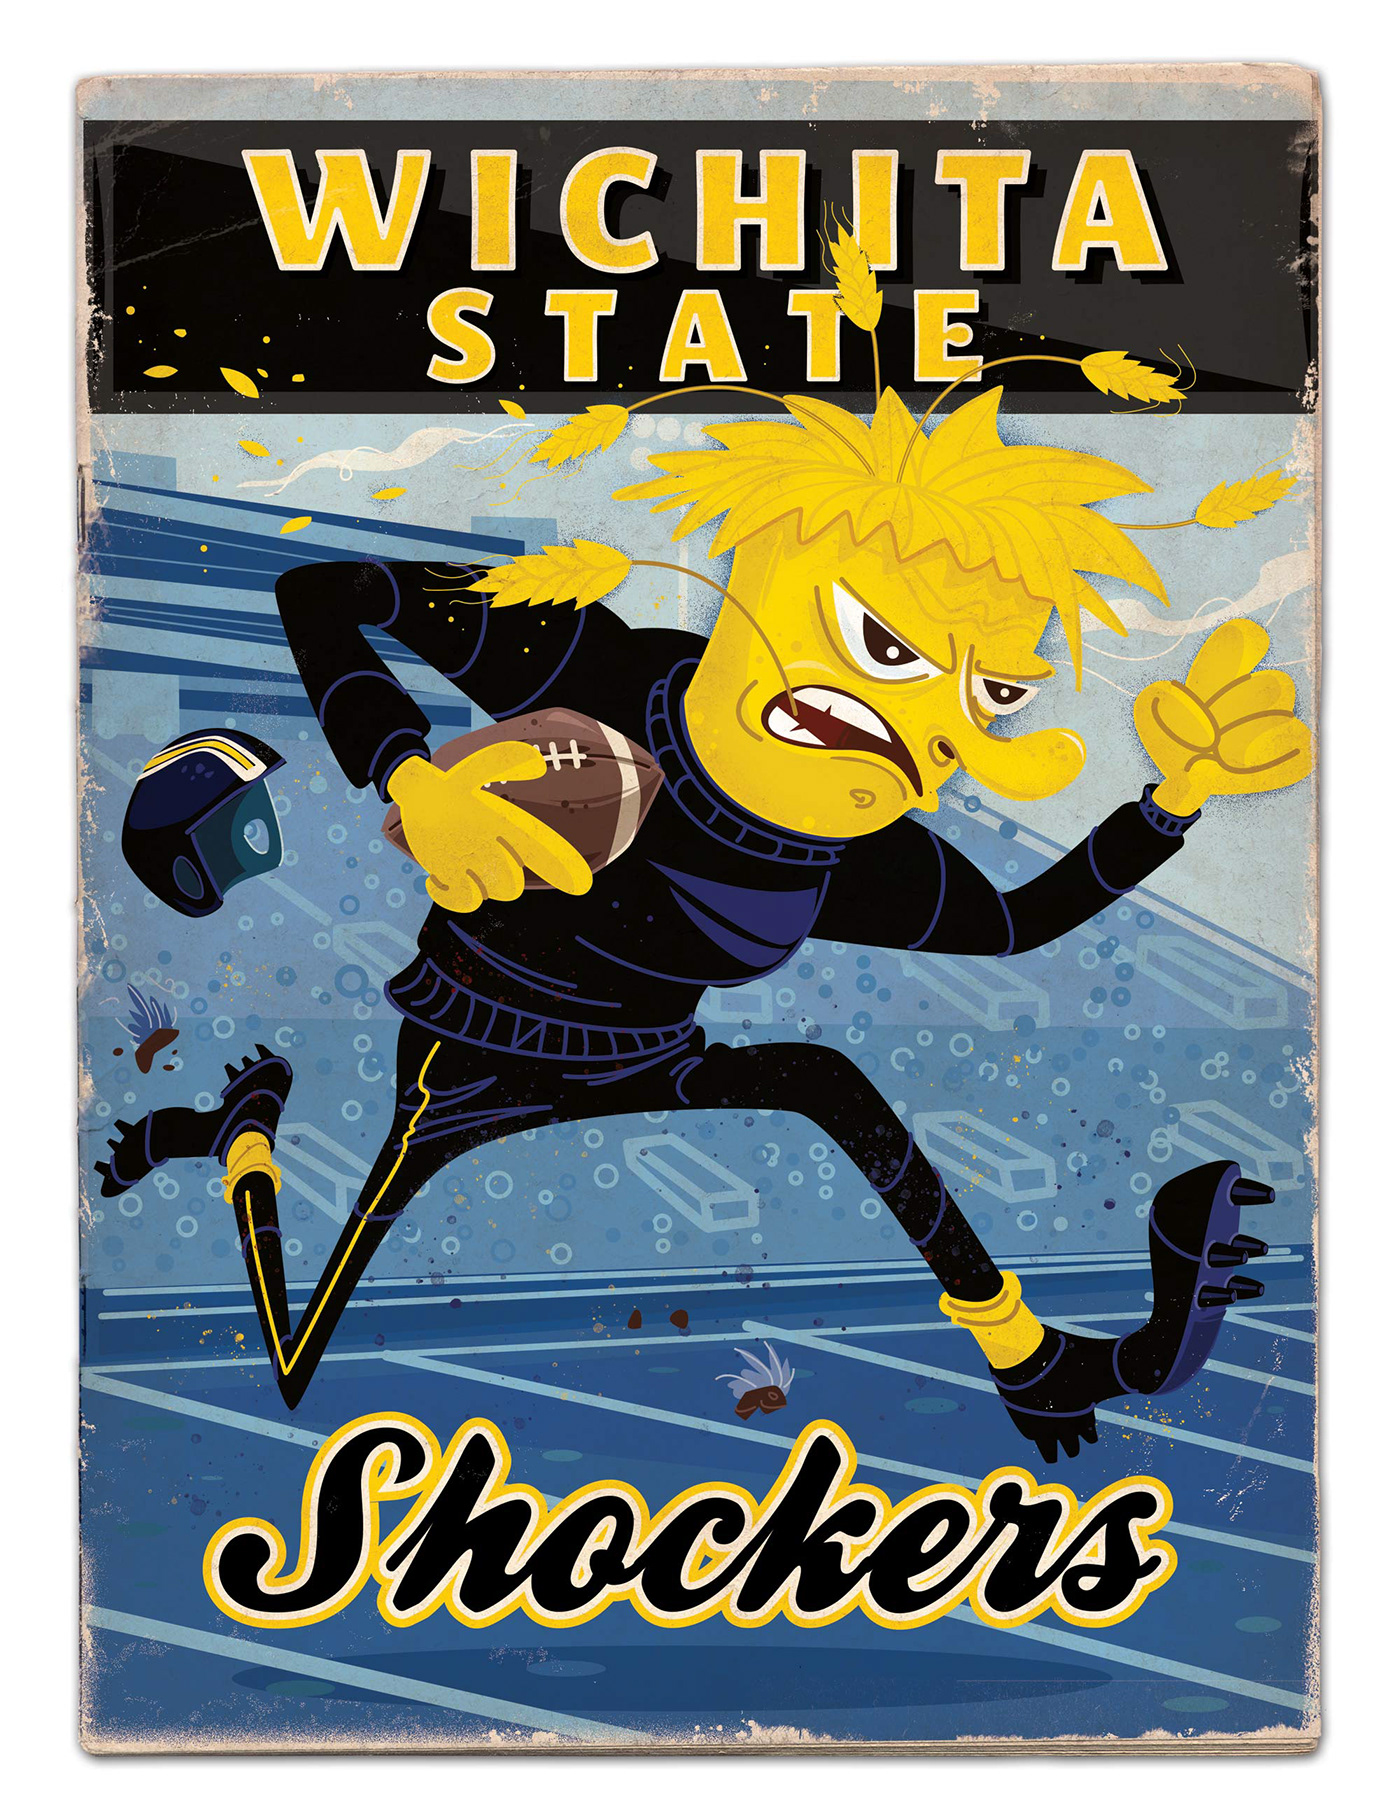 college college football football hay Shockers sports Wichita